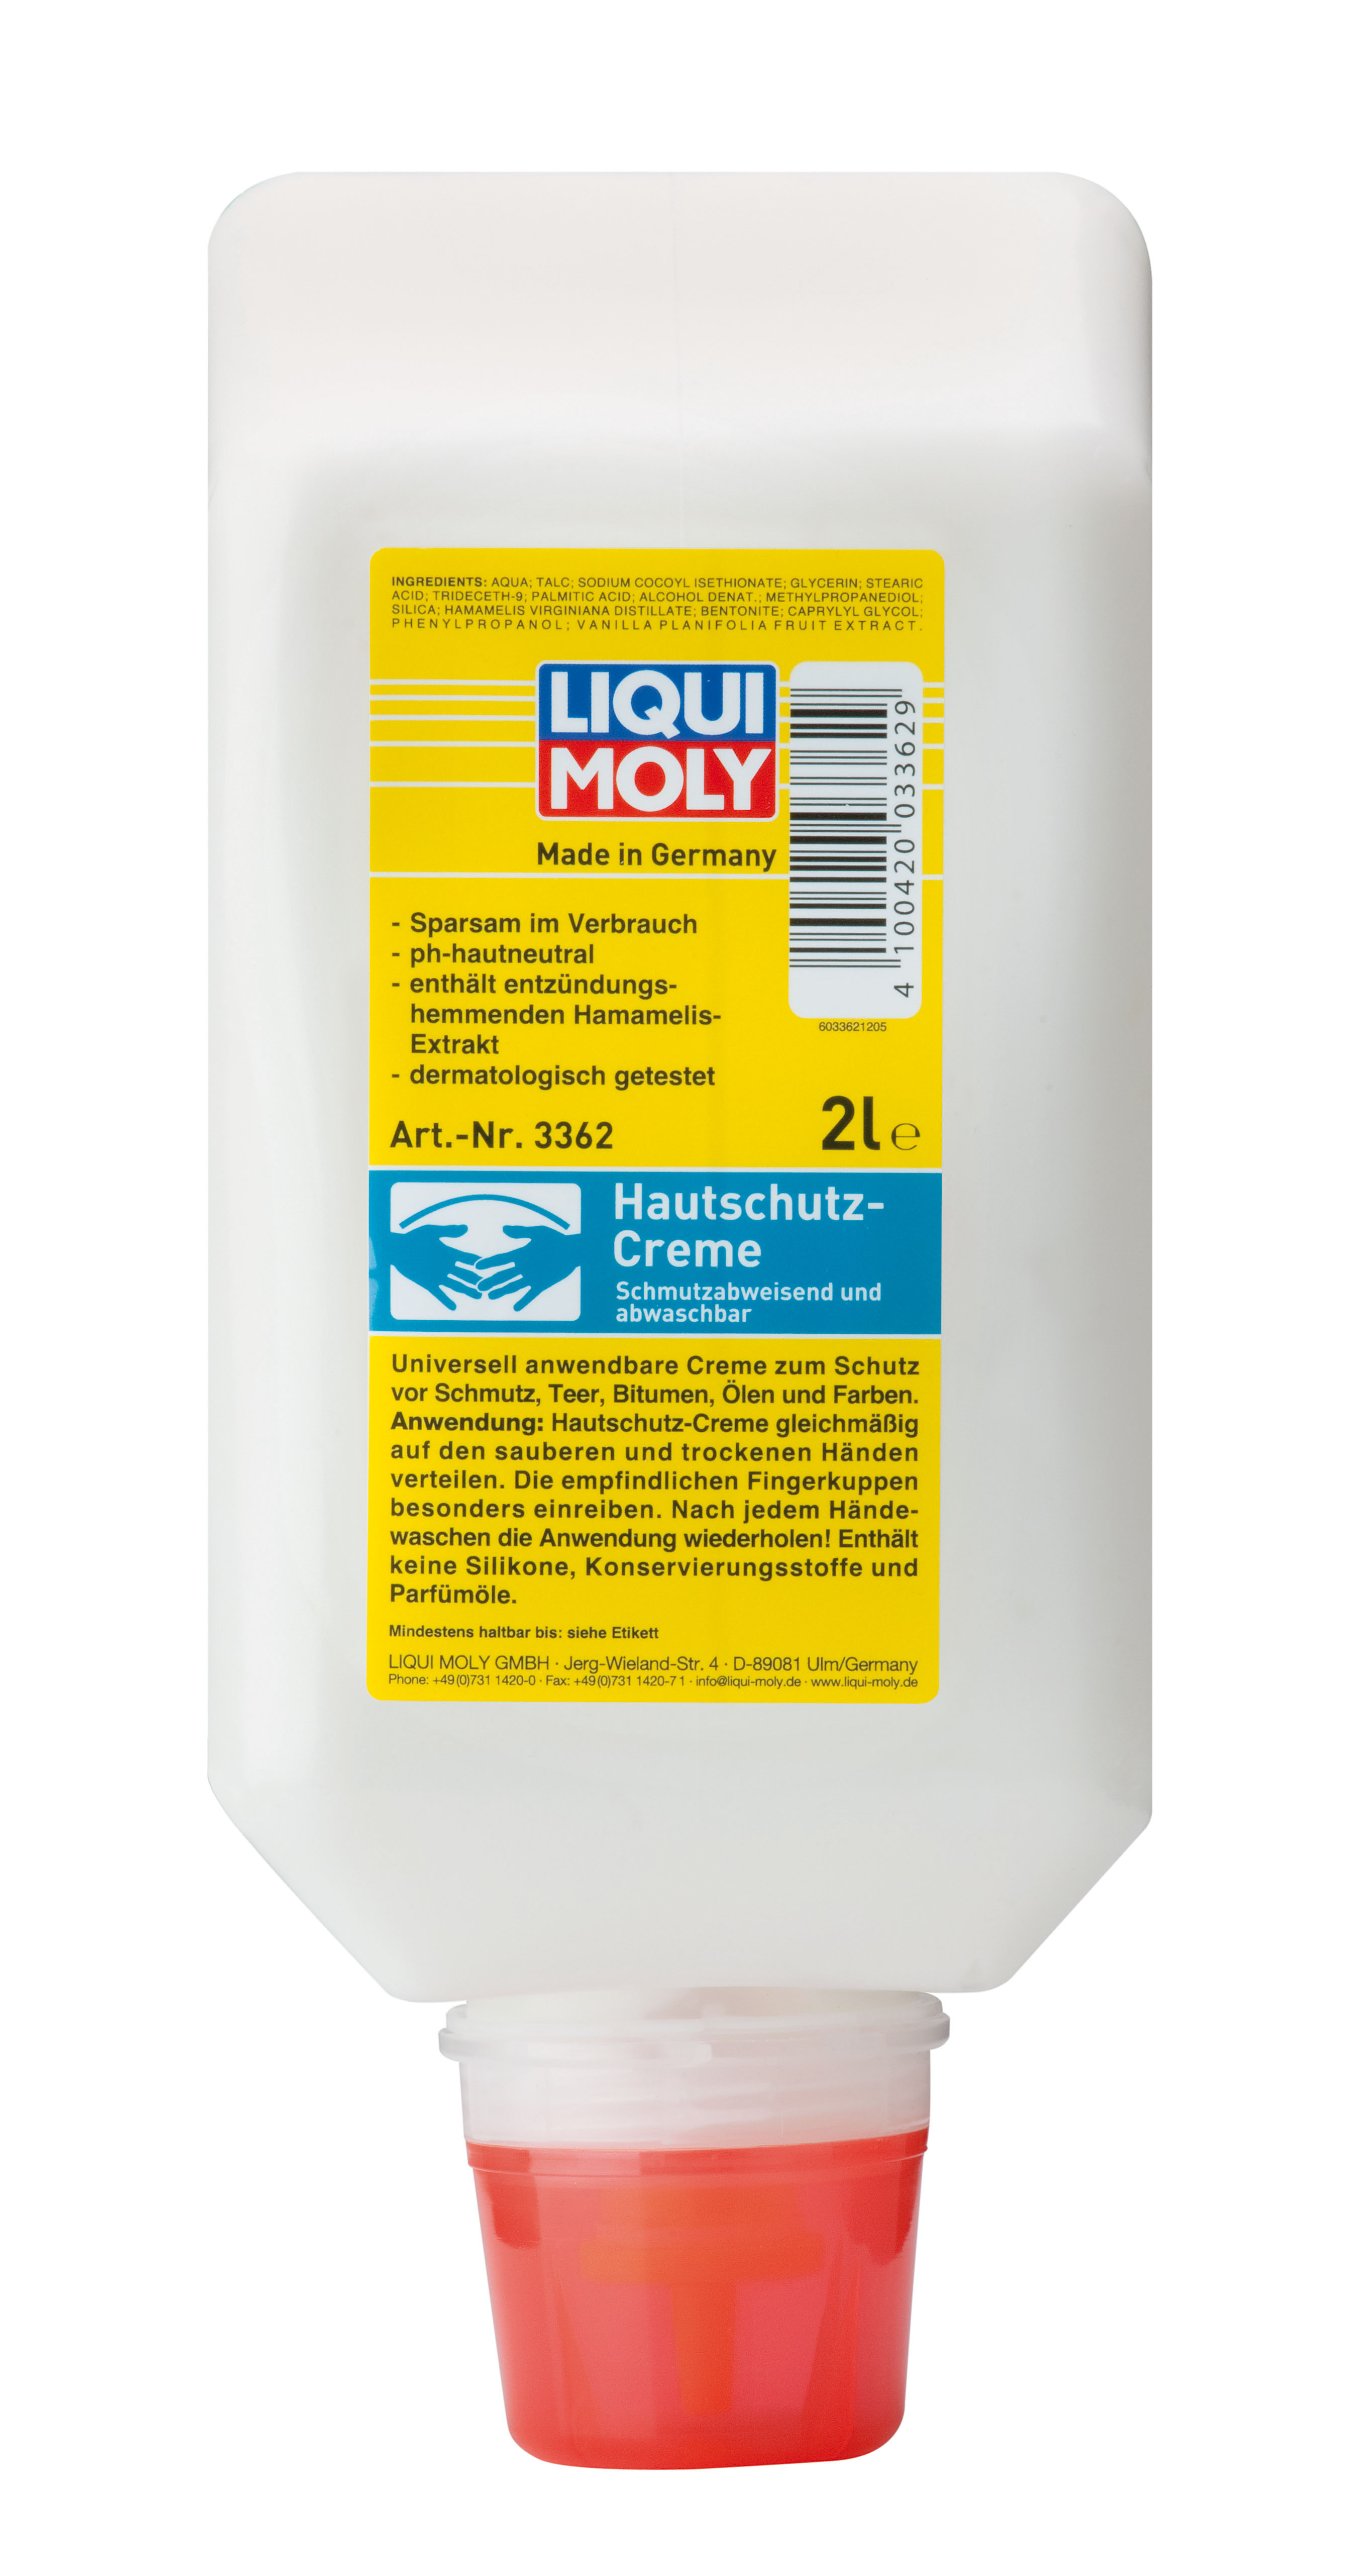 LIQUI MOLY Hautschutz-Creme | 2 L | Hautpflege | Art.-Nr.: 3362 von Liqui Moly